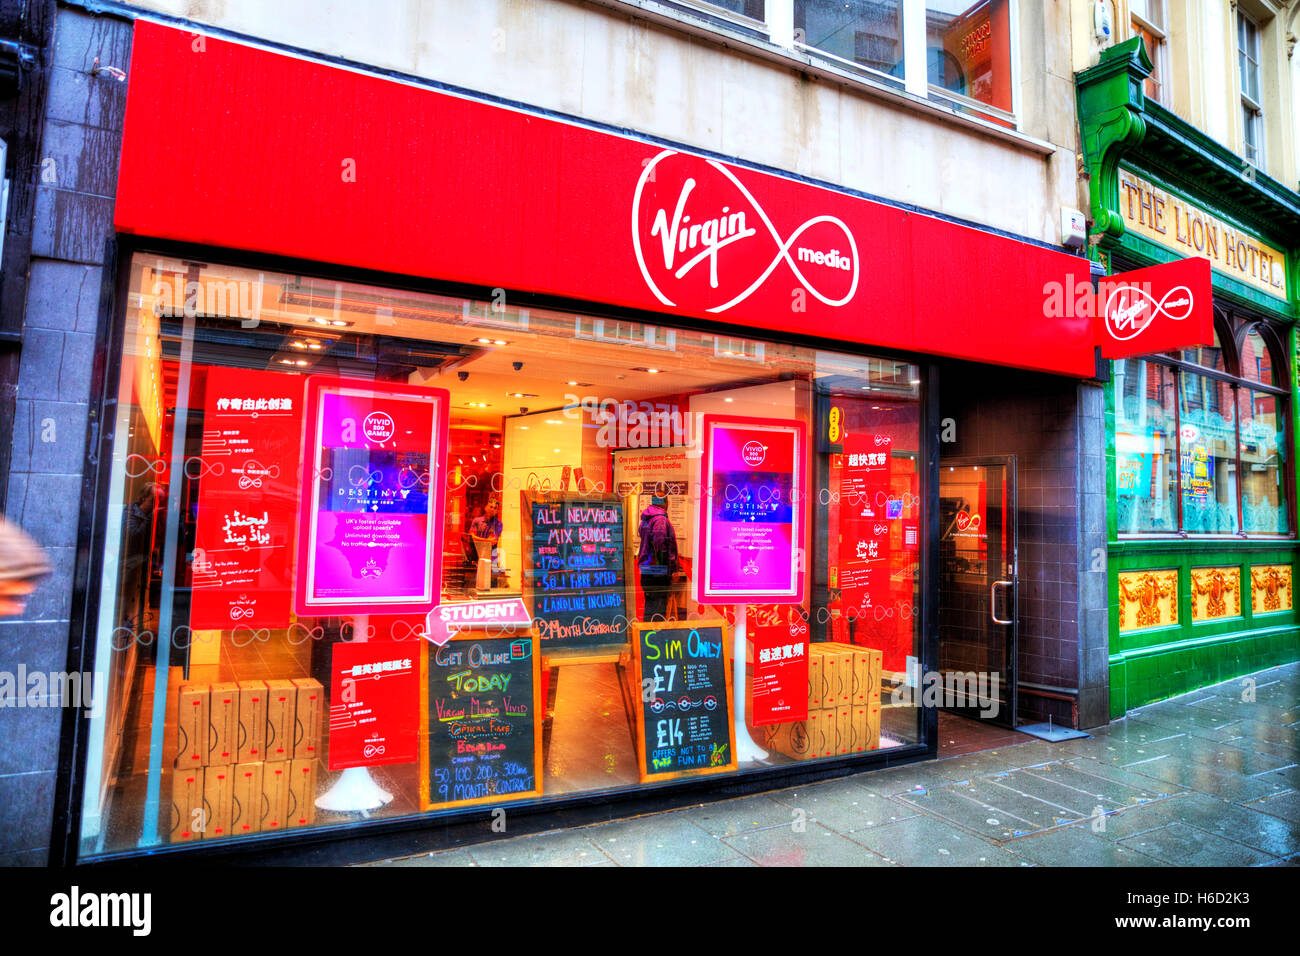 Virgin media shop front sign building exterior window display mobile ...